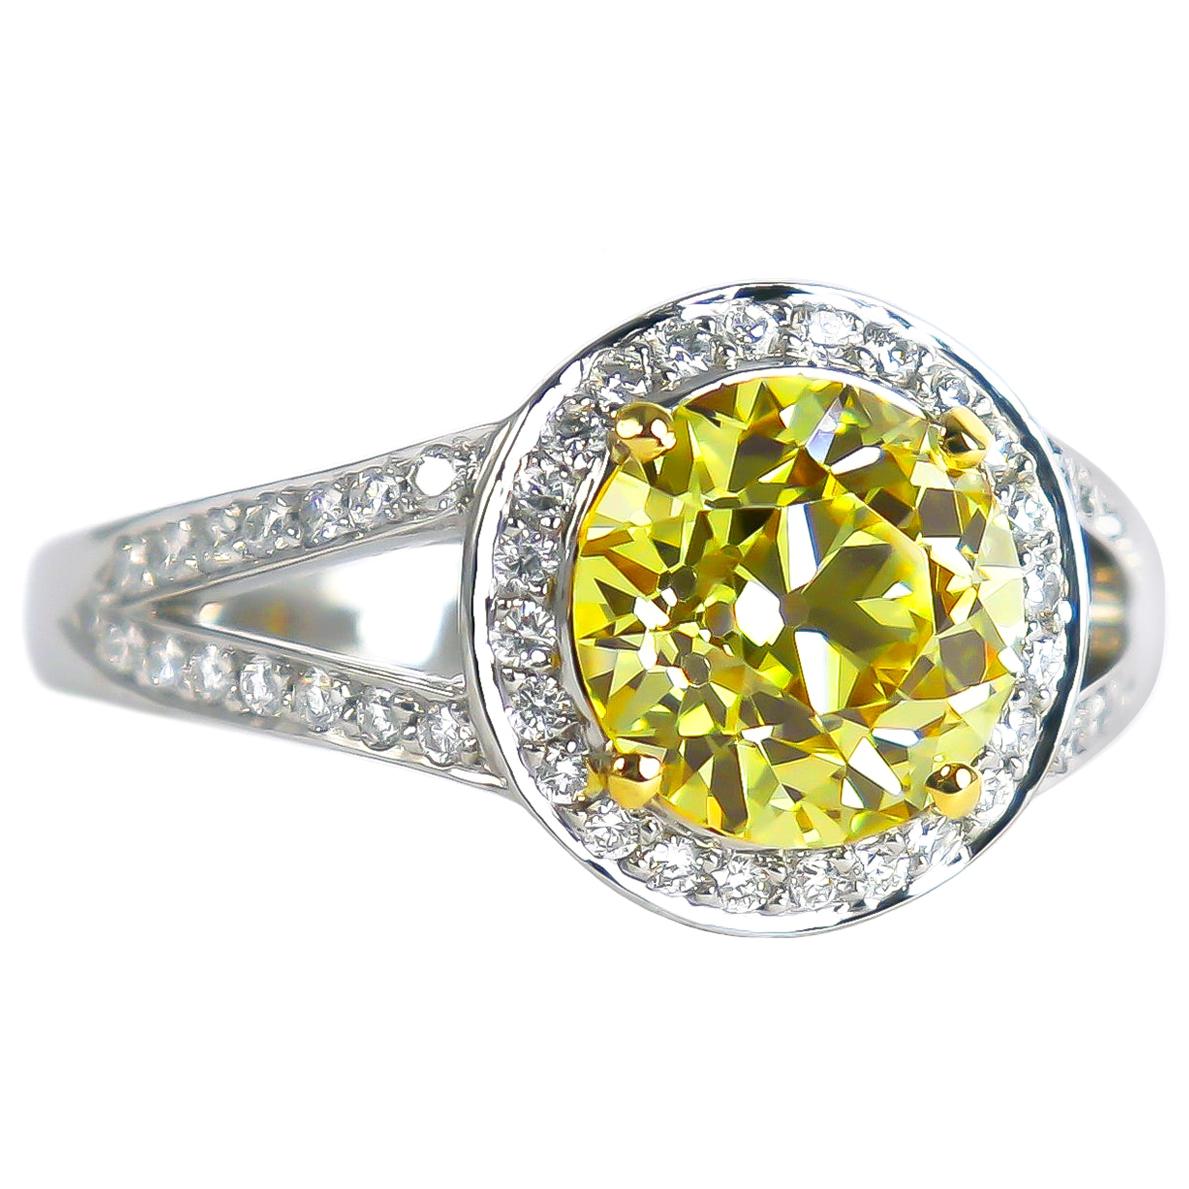 J. Birnbach GIA Certified 2.44 Carat Fancy Yellow Old European Cut Diamond Ring